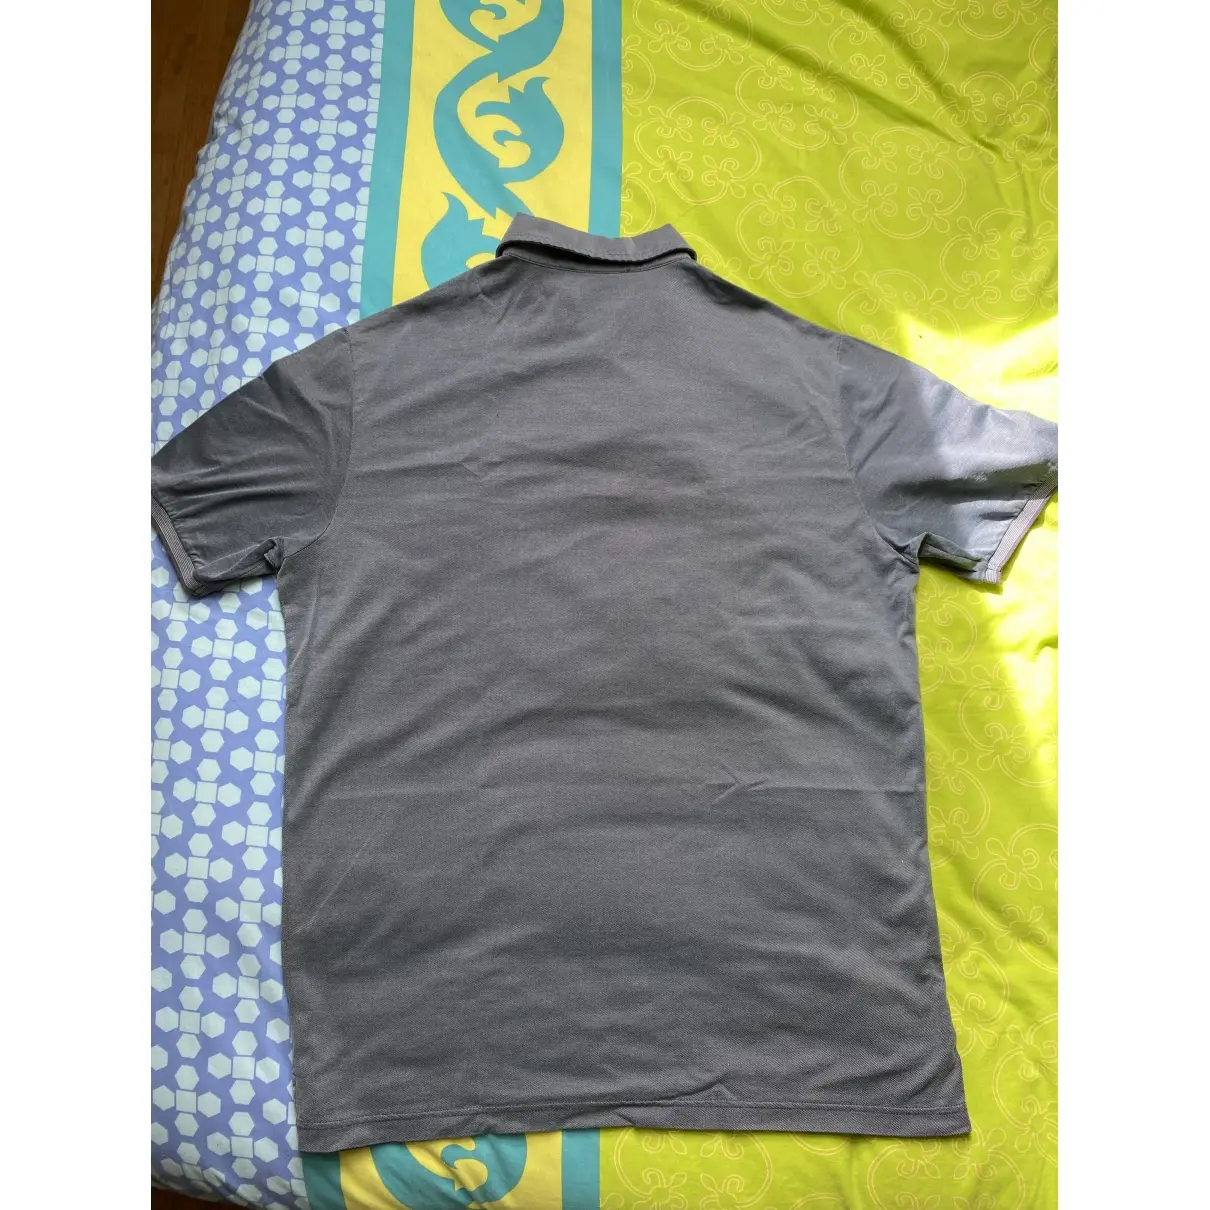 Loro Piana Polo shirt for sale